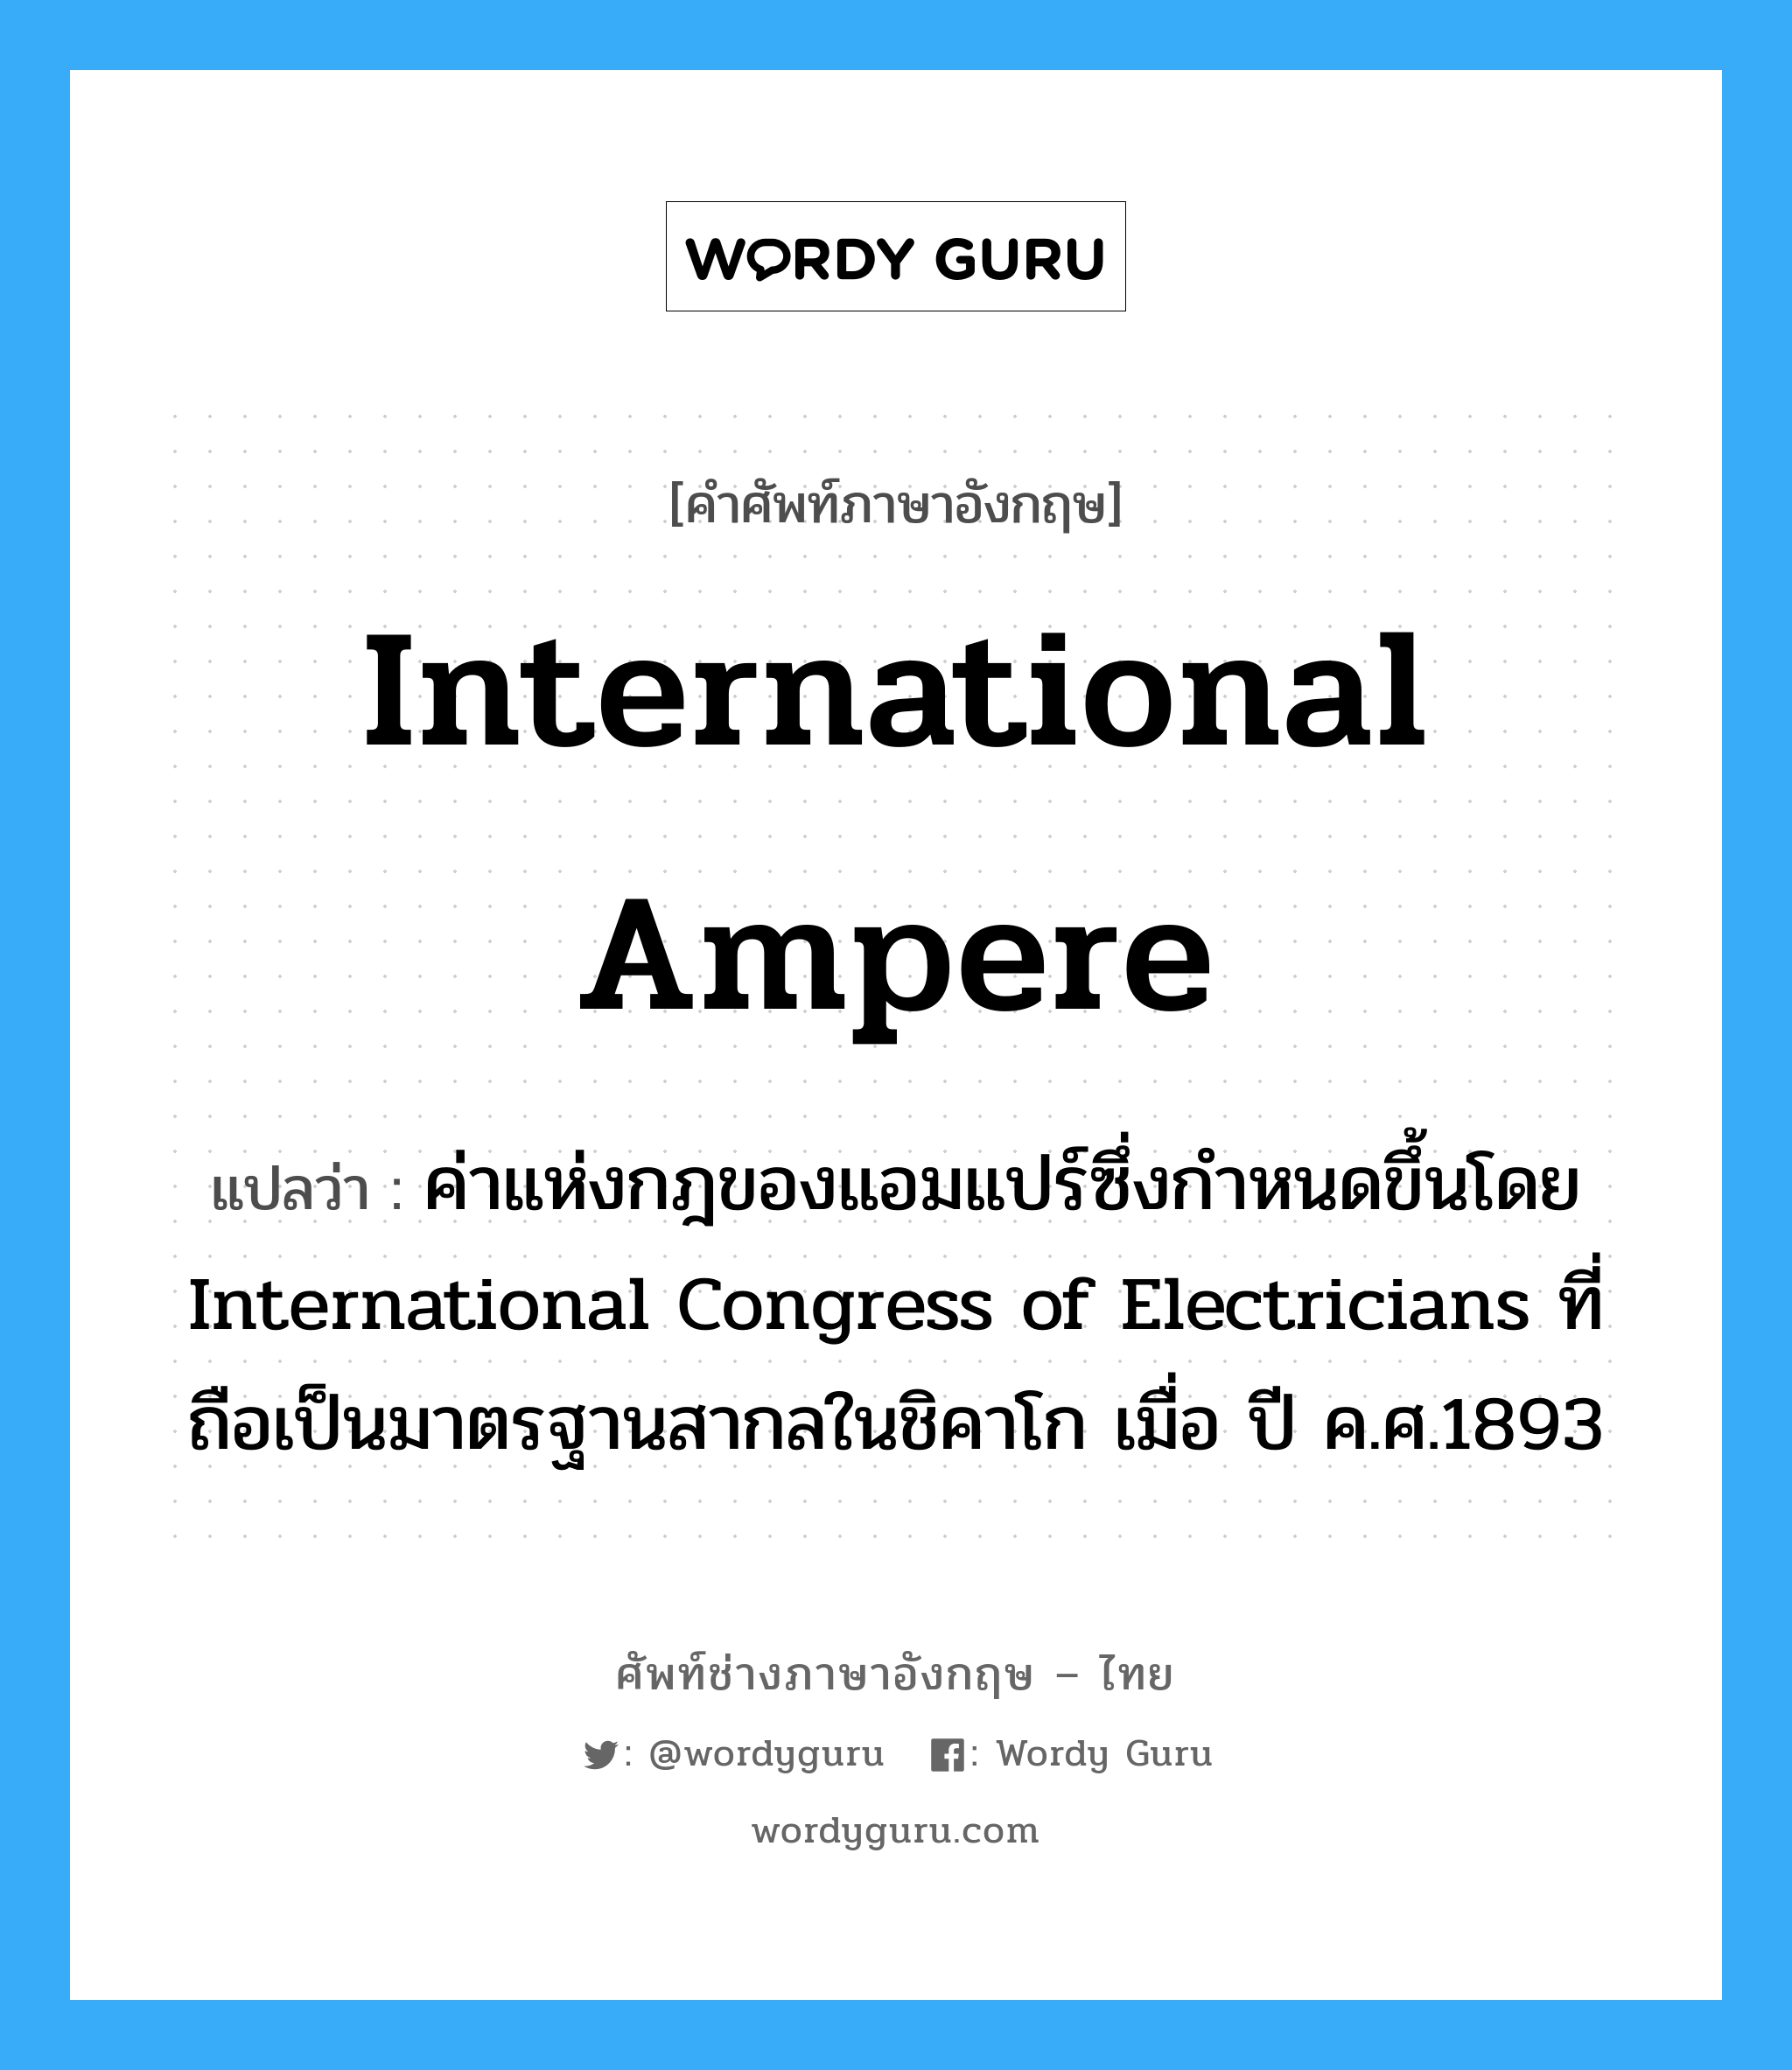 international ampere แปลว่า?, คำศัพท์ช่างภาษาอังกฤษ - ไทย international ampere คำศัพท์ภาษาอังกฤษ international ampere แปลว่า ค่าแห่งกฎของแอมแปร์ซึ่งกำหนดขึ้นโดย International Congress of Electricians ที่ถือเป็นมาตรฐานสากลในชิคาโก เมื่อ ปี ค.ศ.1893